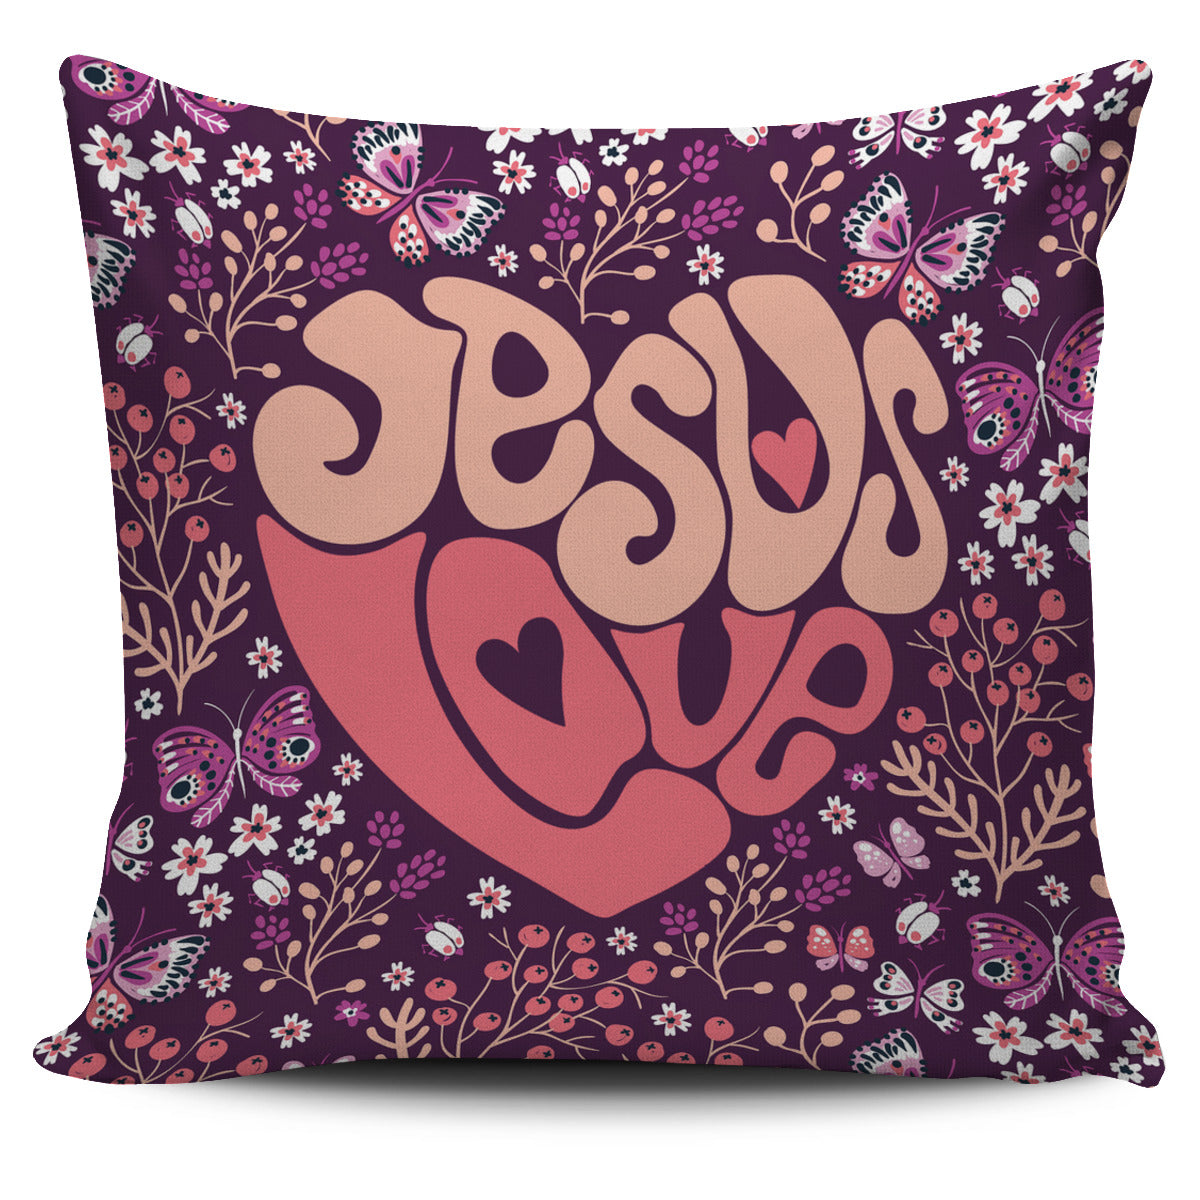 Jesus Love Pillow Cover